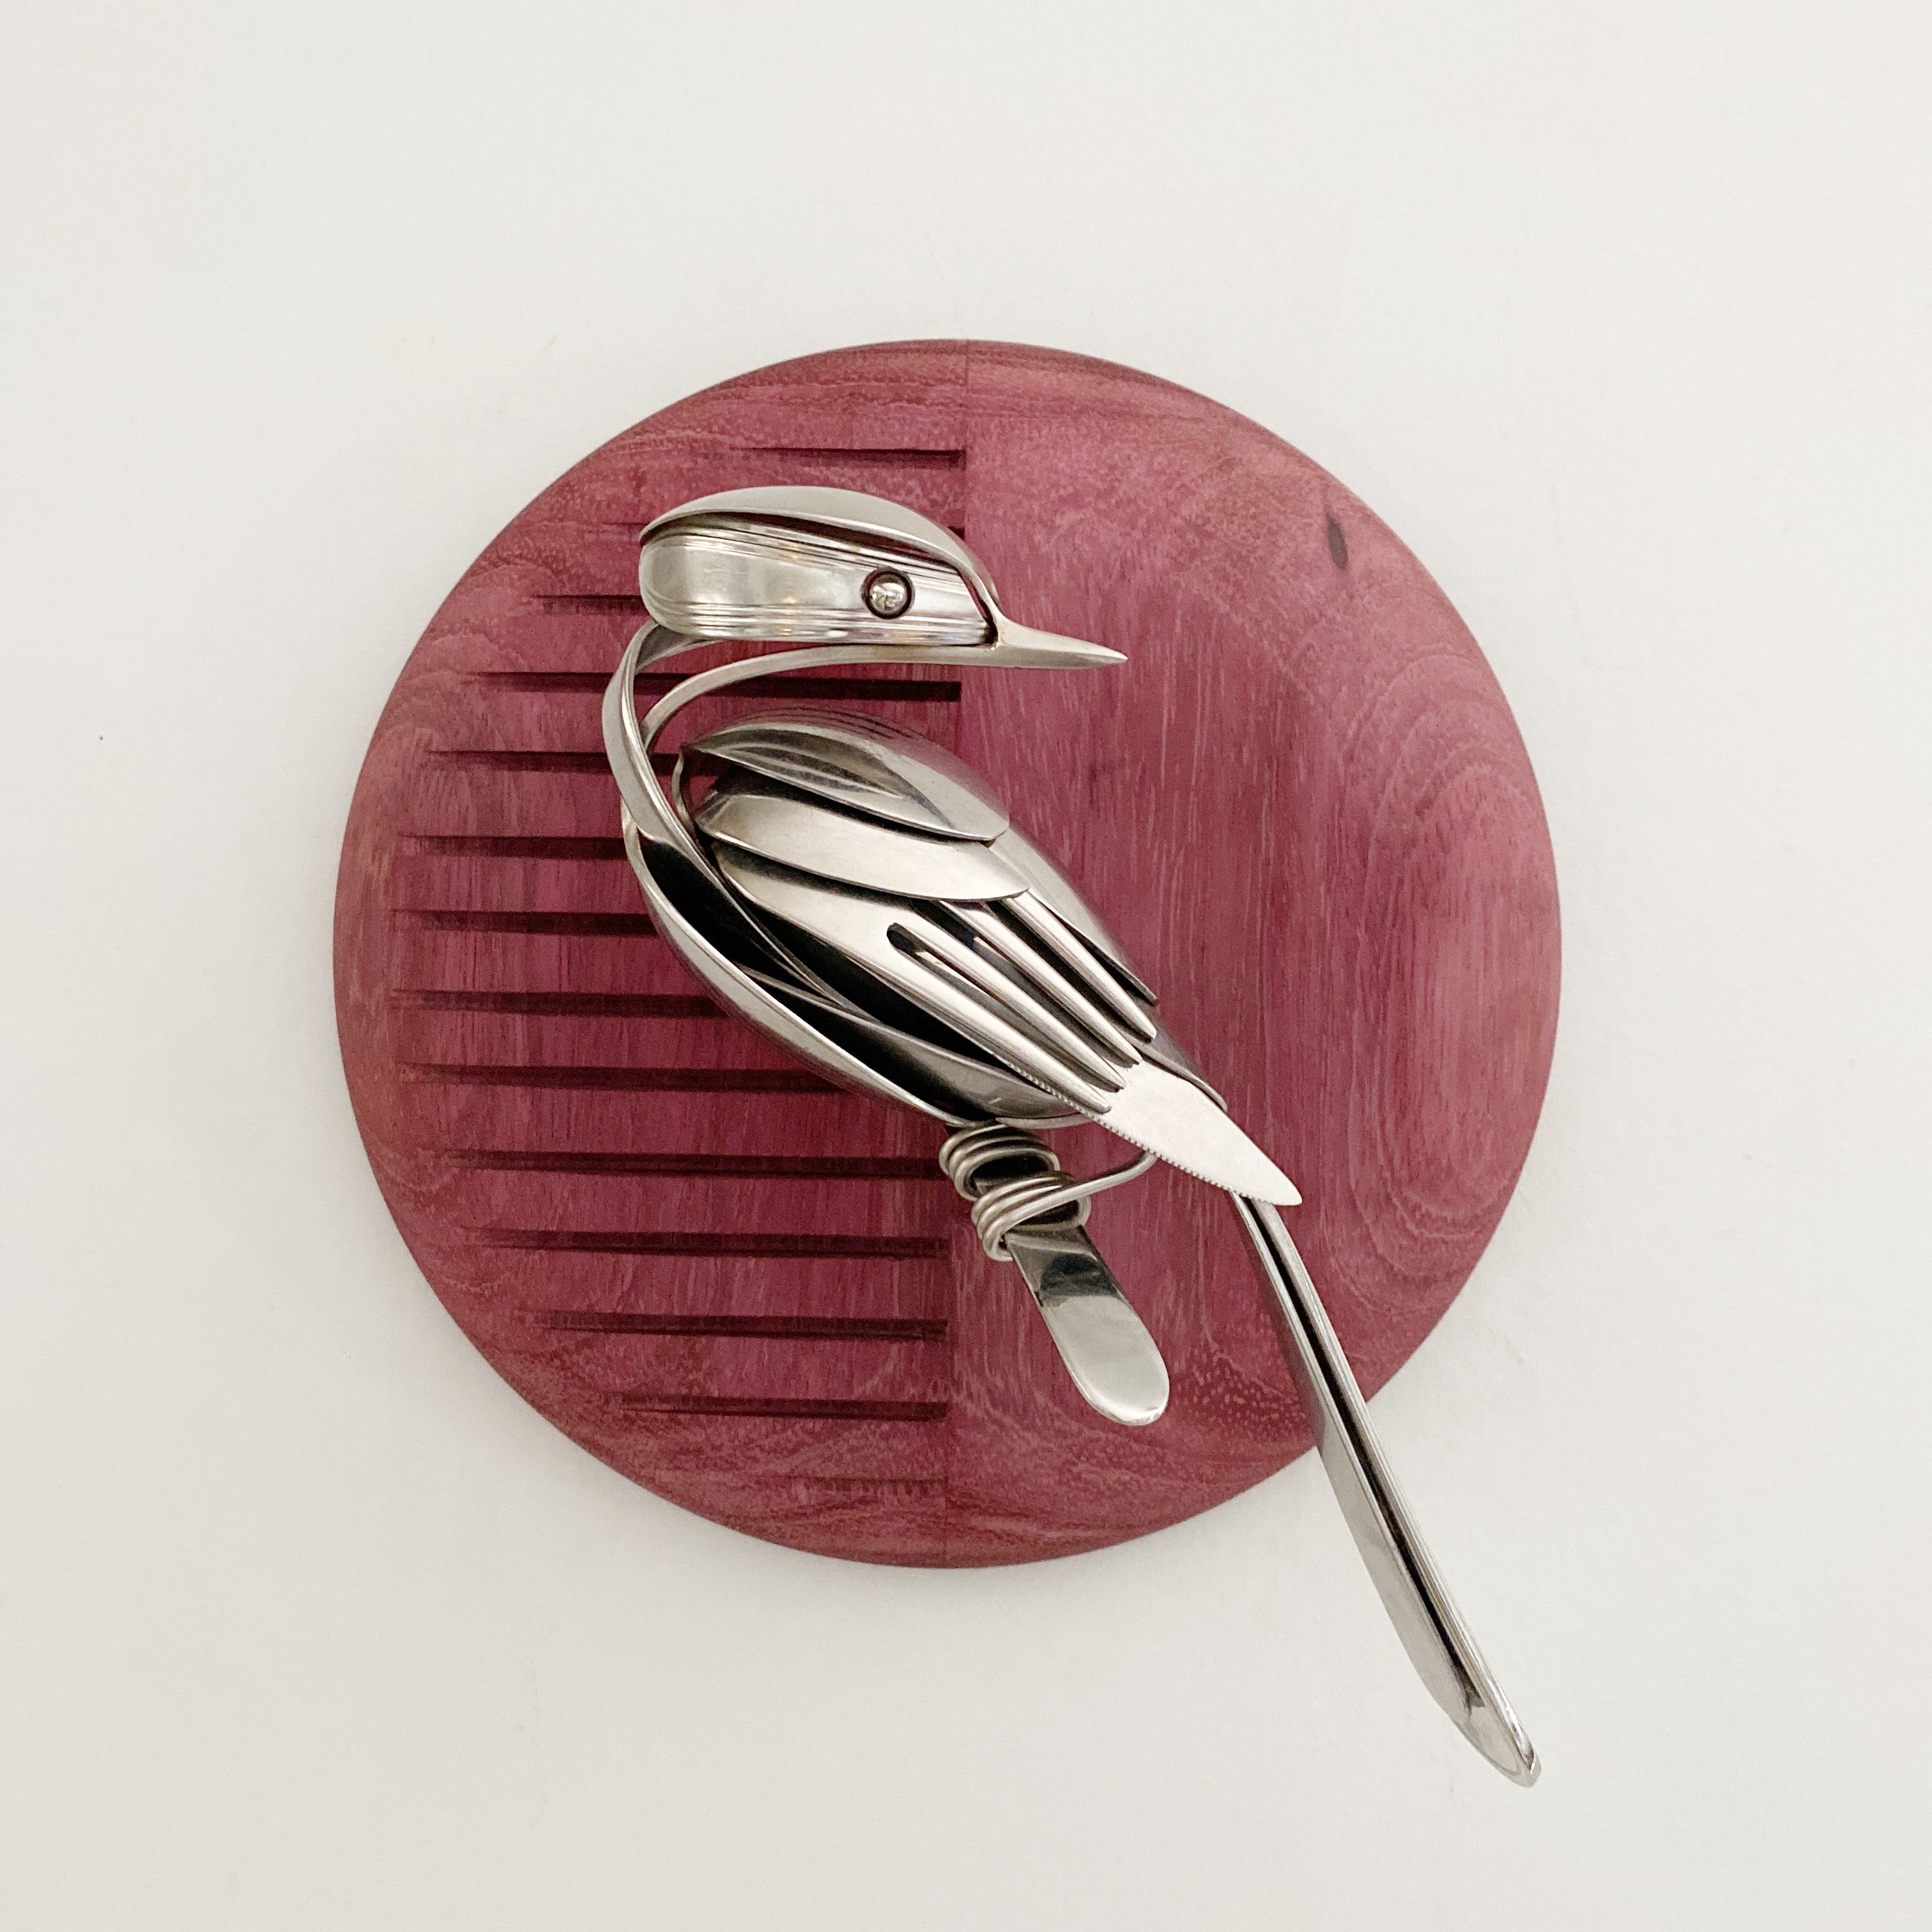 "Johnny" - Upcycled Metal Bird Sculpture